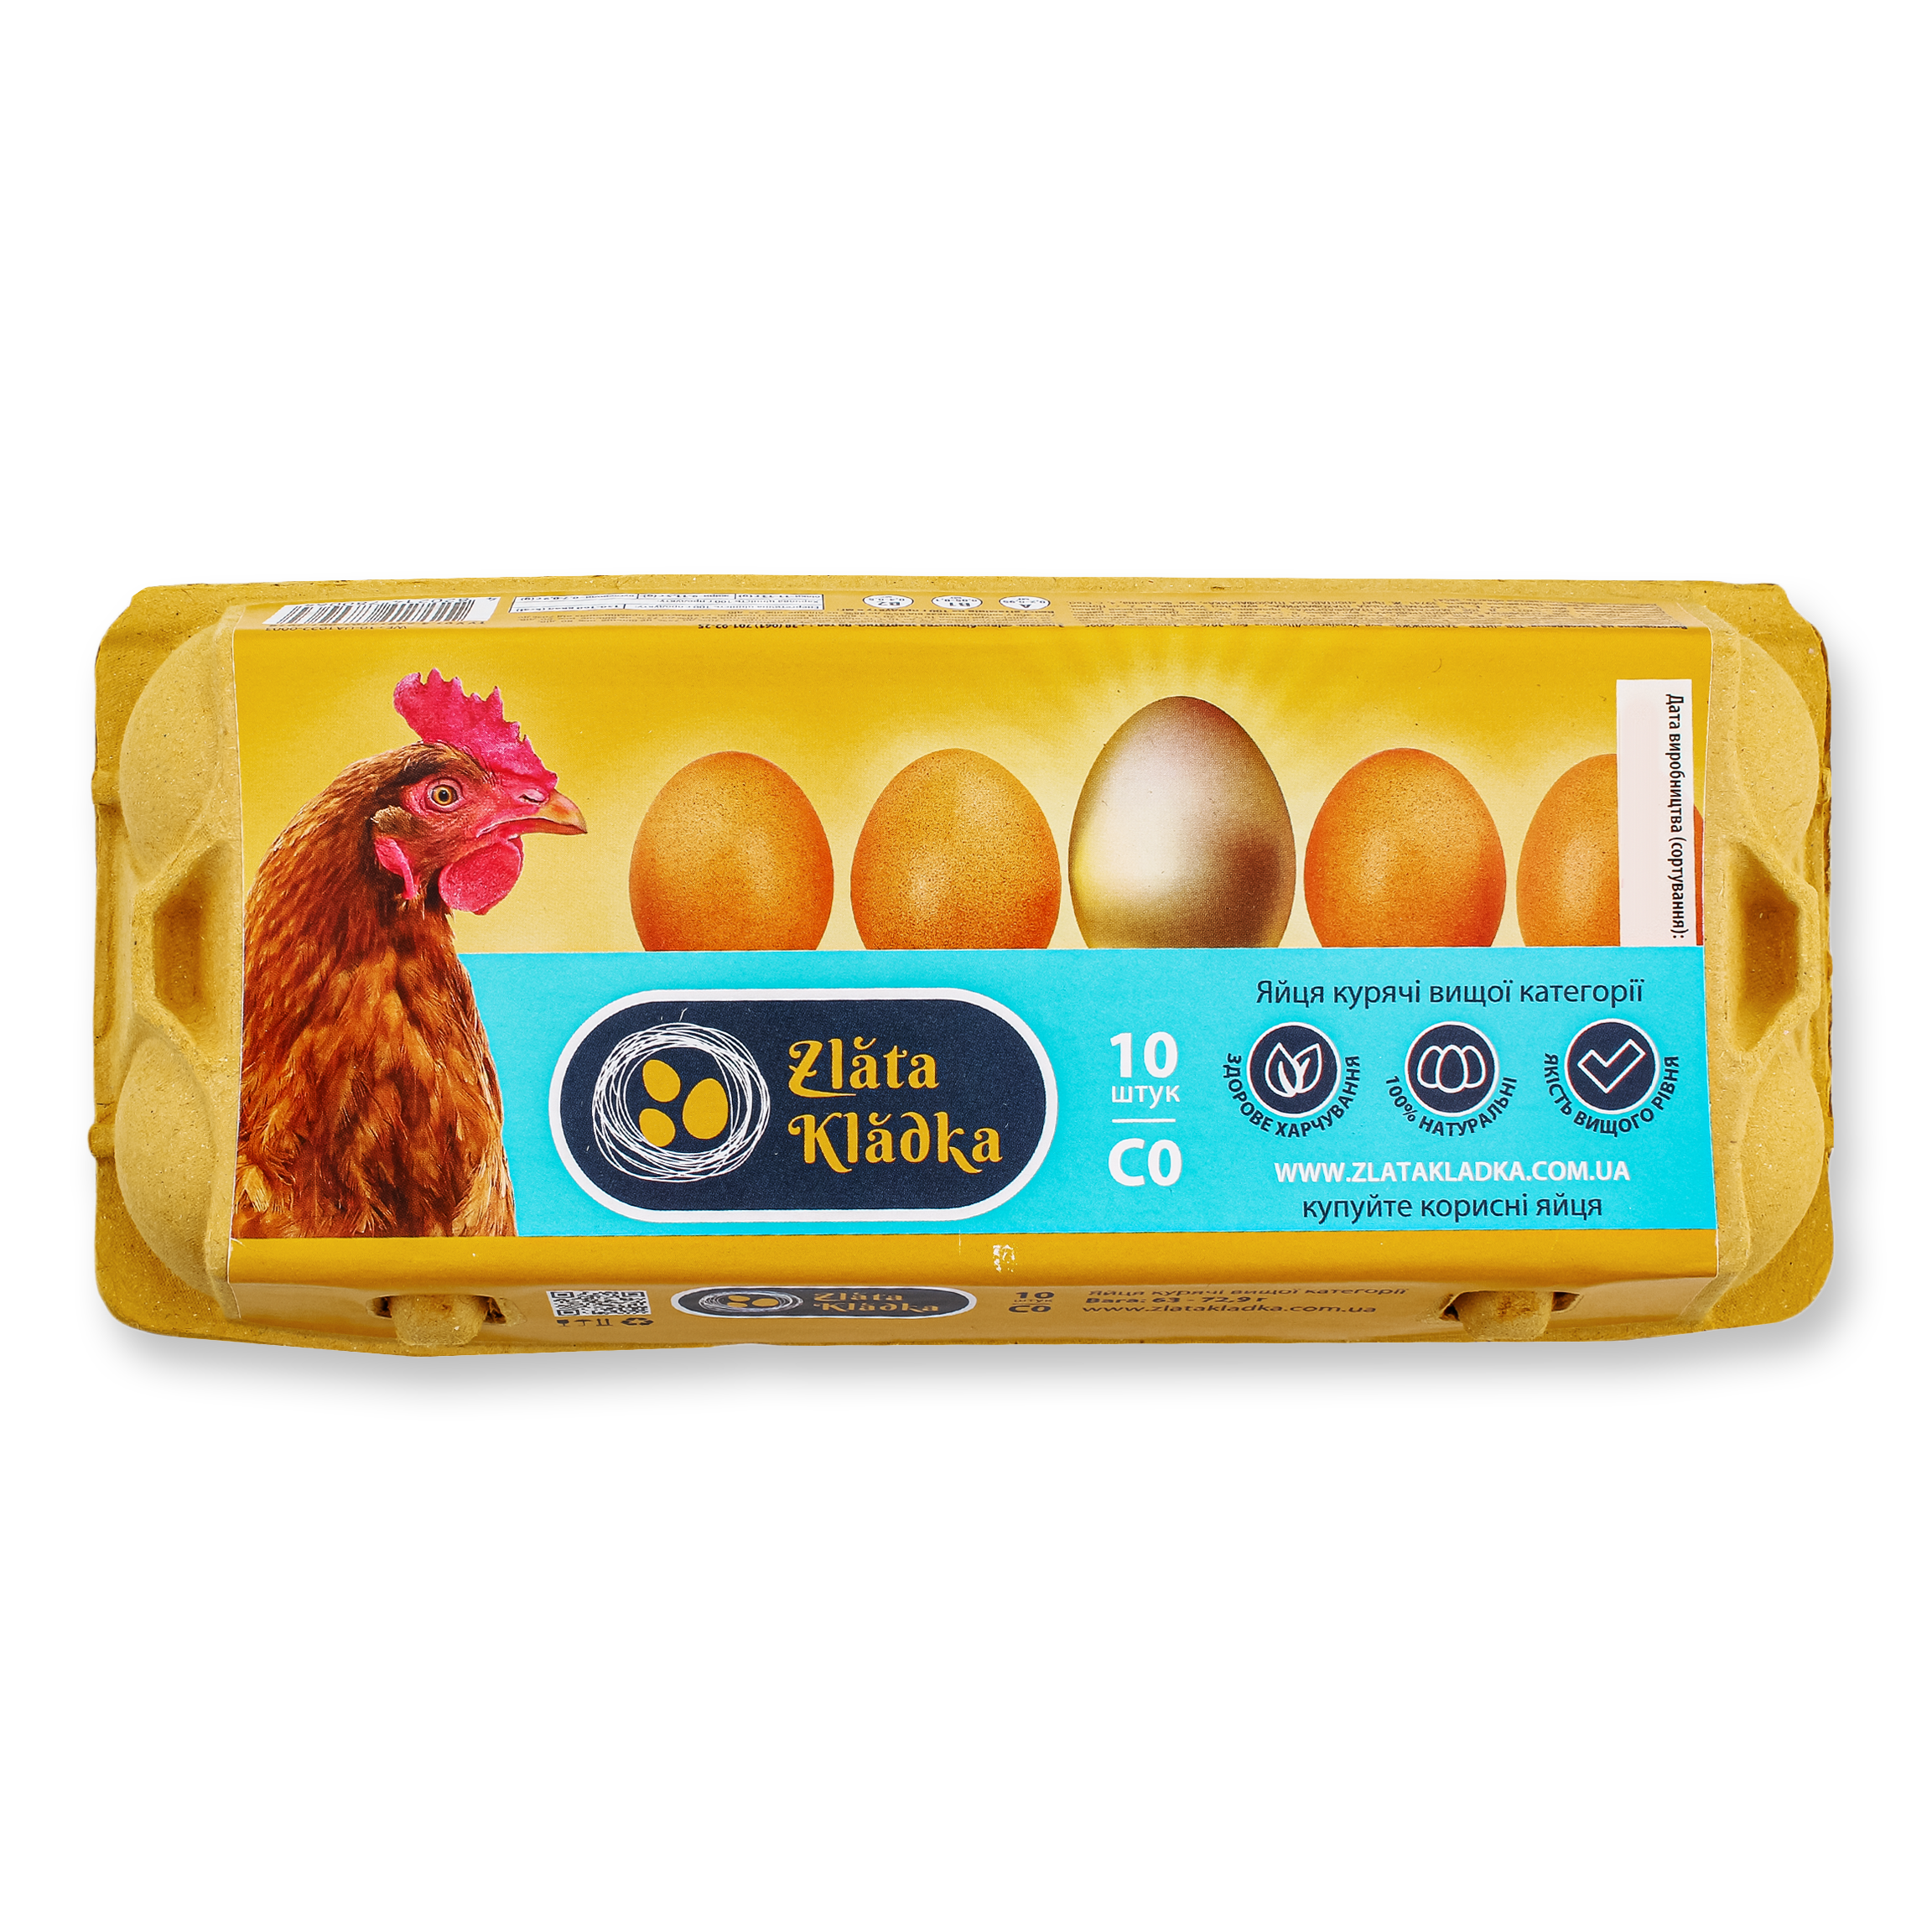 Яйця Zlata Кladka курячі С0 10шт